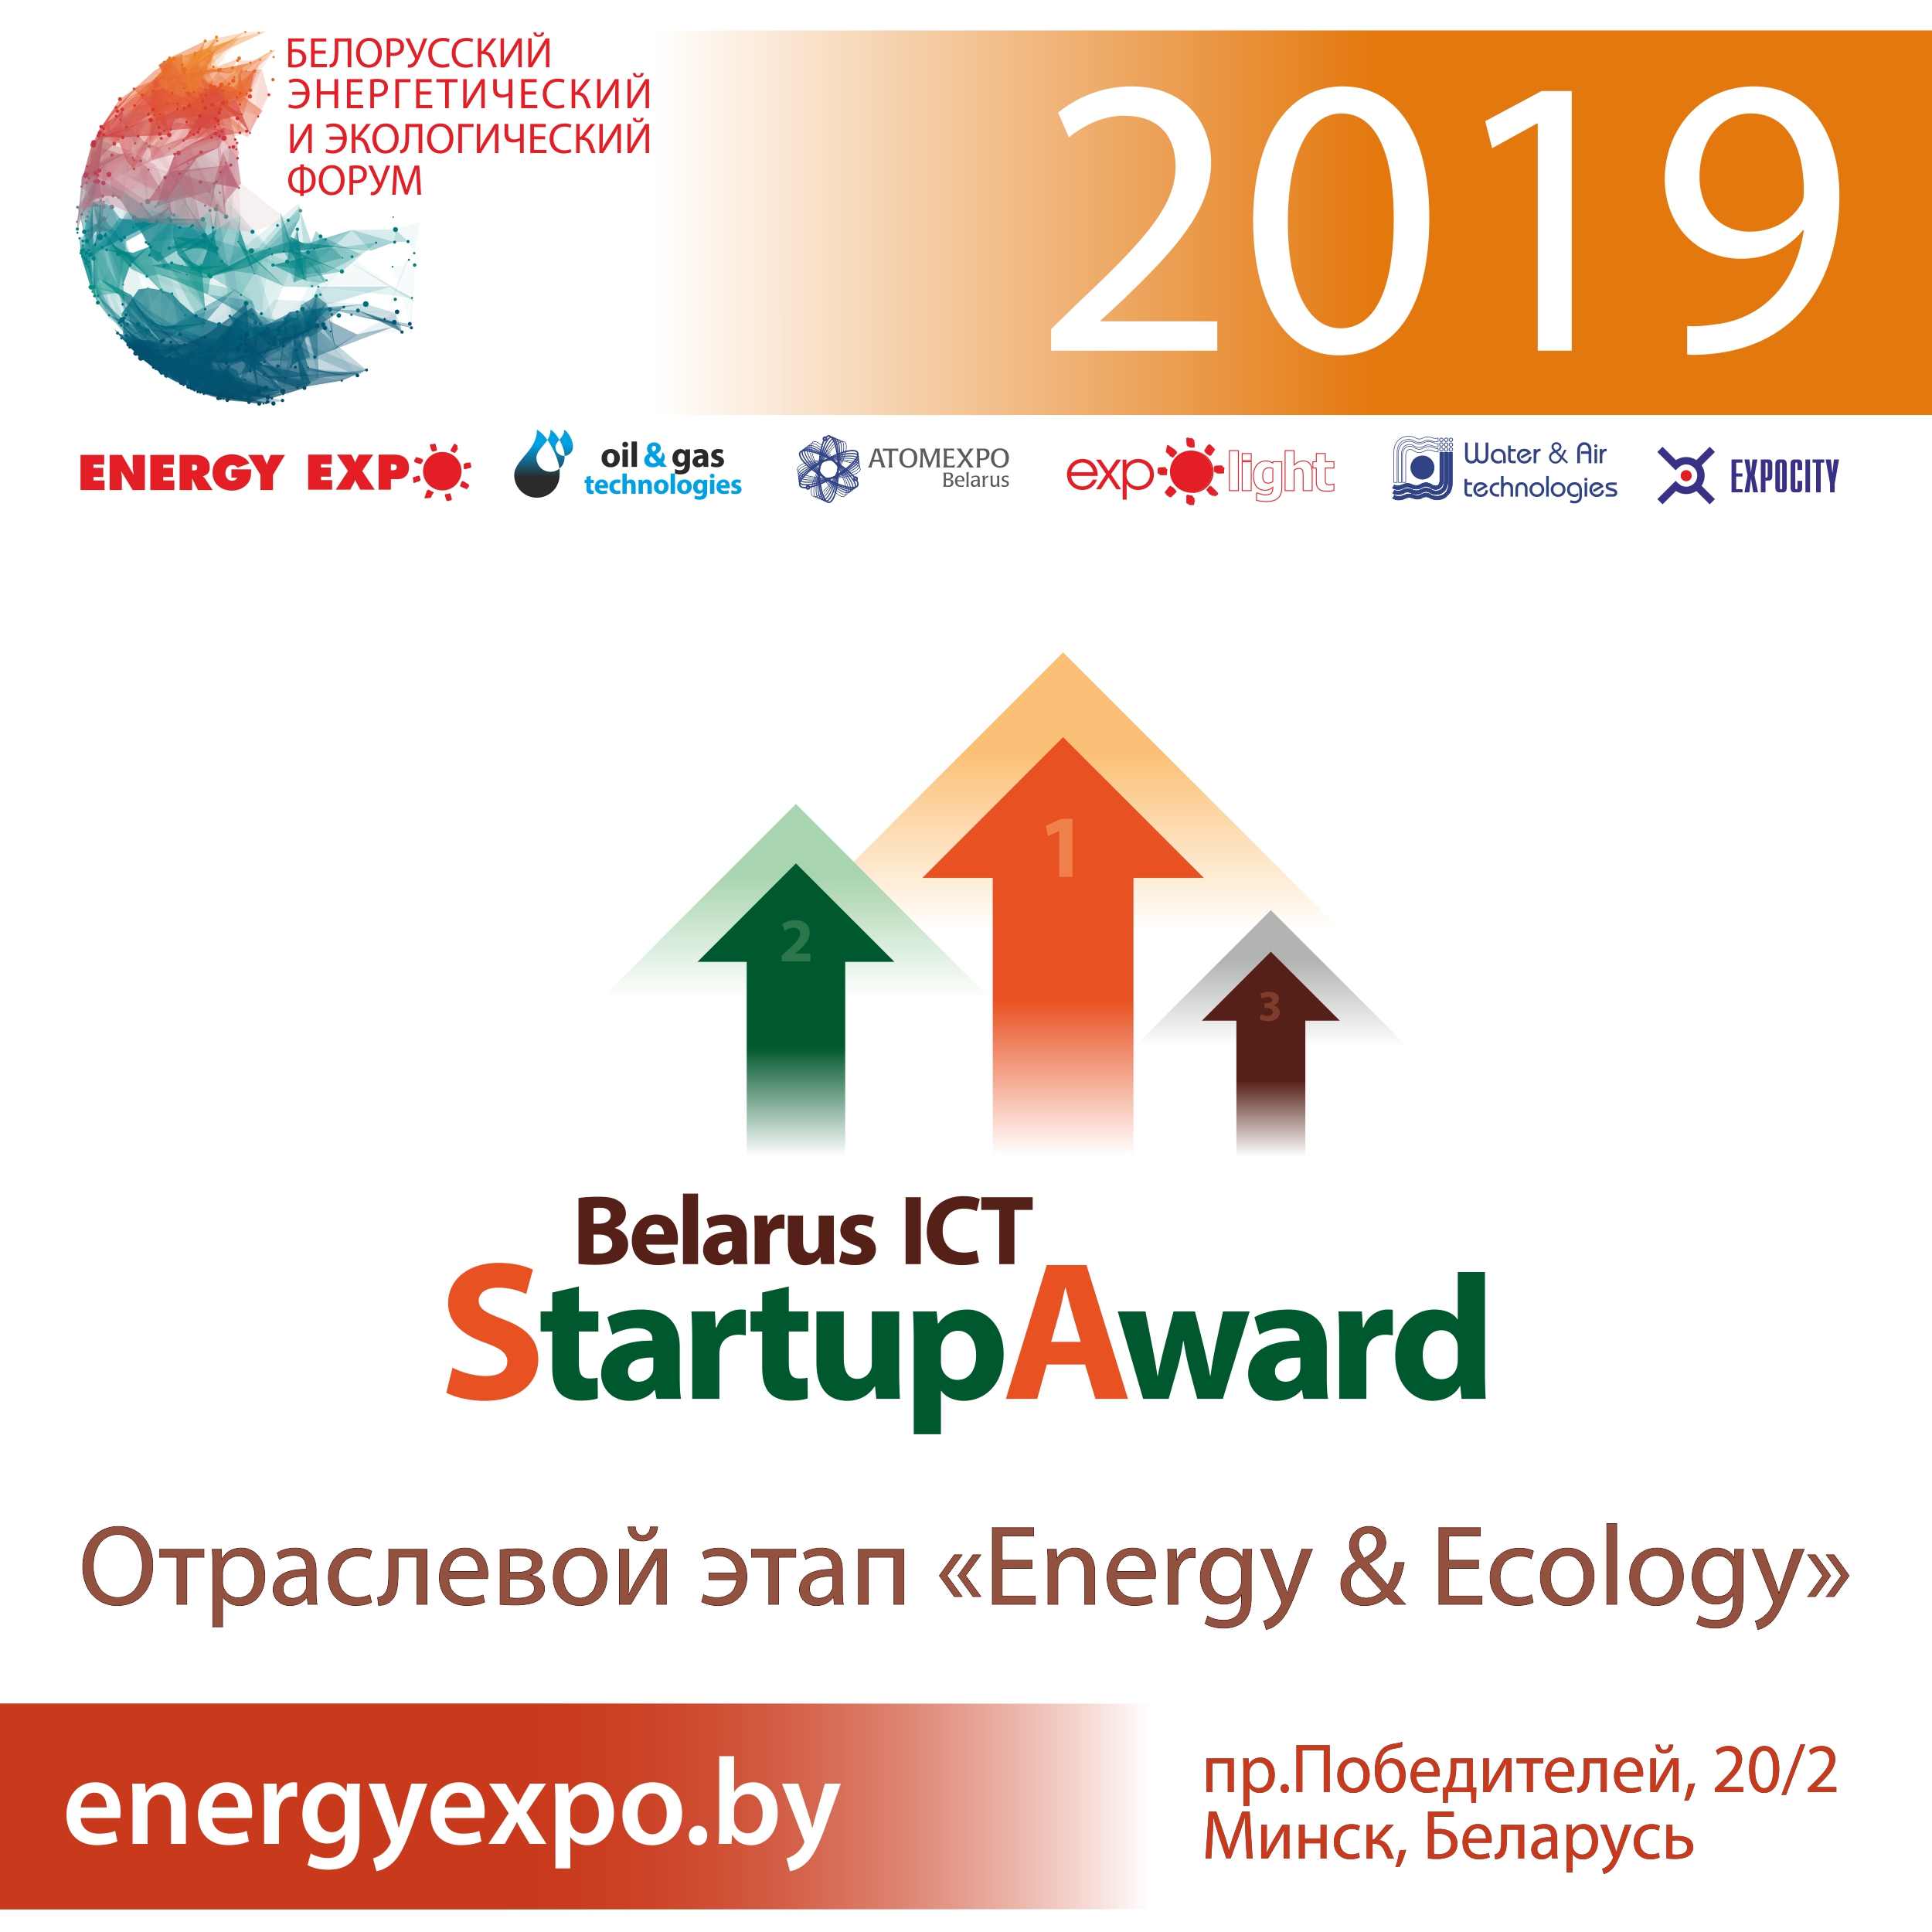 Belarus ICT StartUp Award: Energy & Ecology